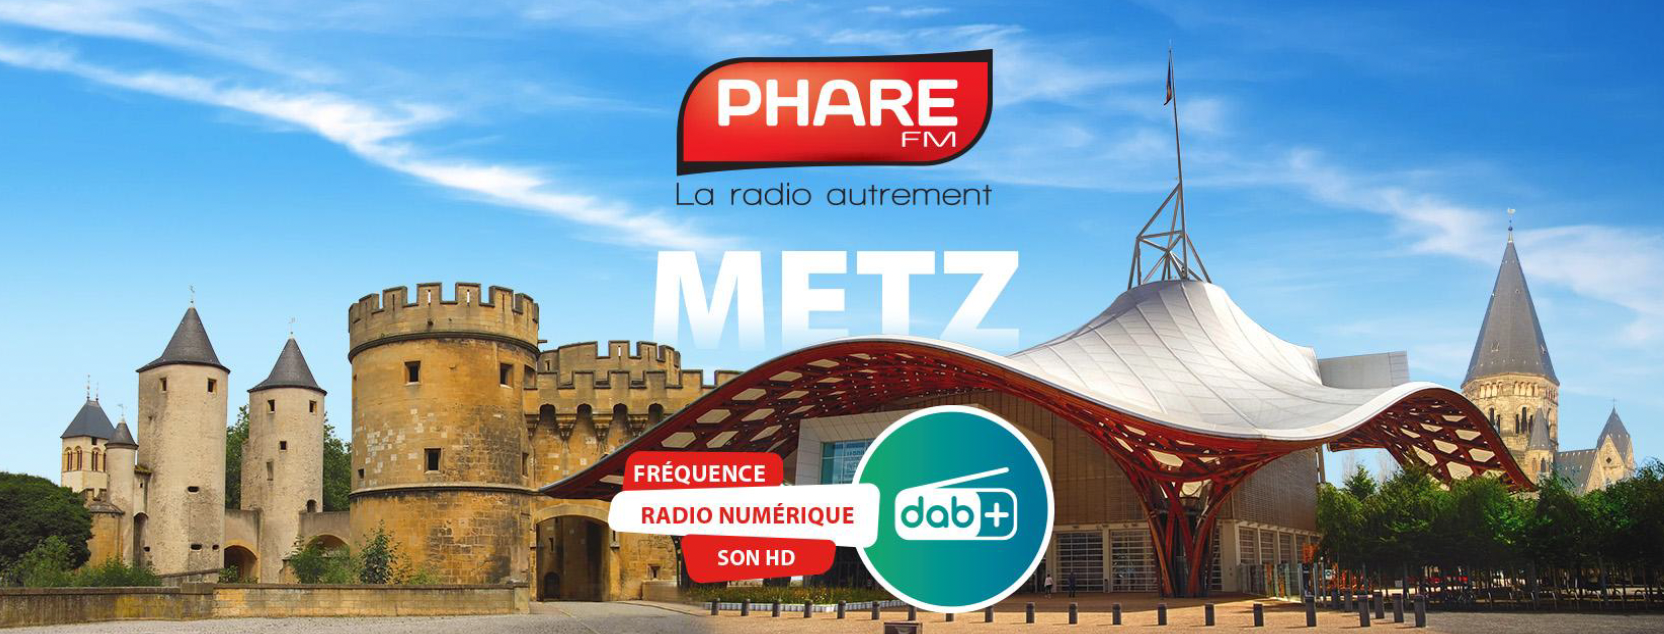 DAB+ : Phare FM a lancé sa 15e zone de diffusion